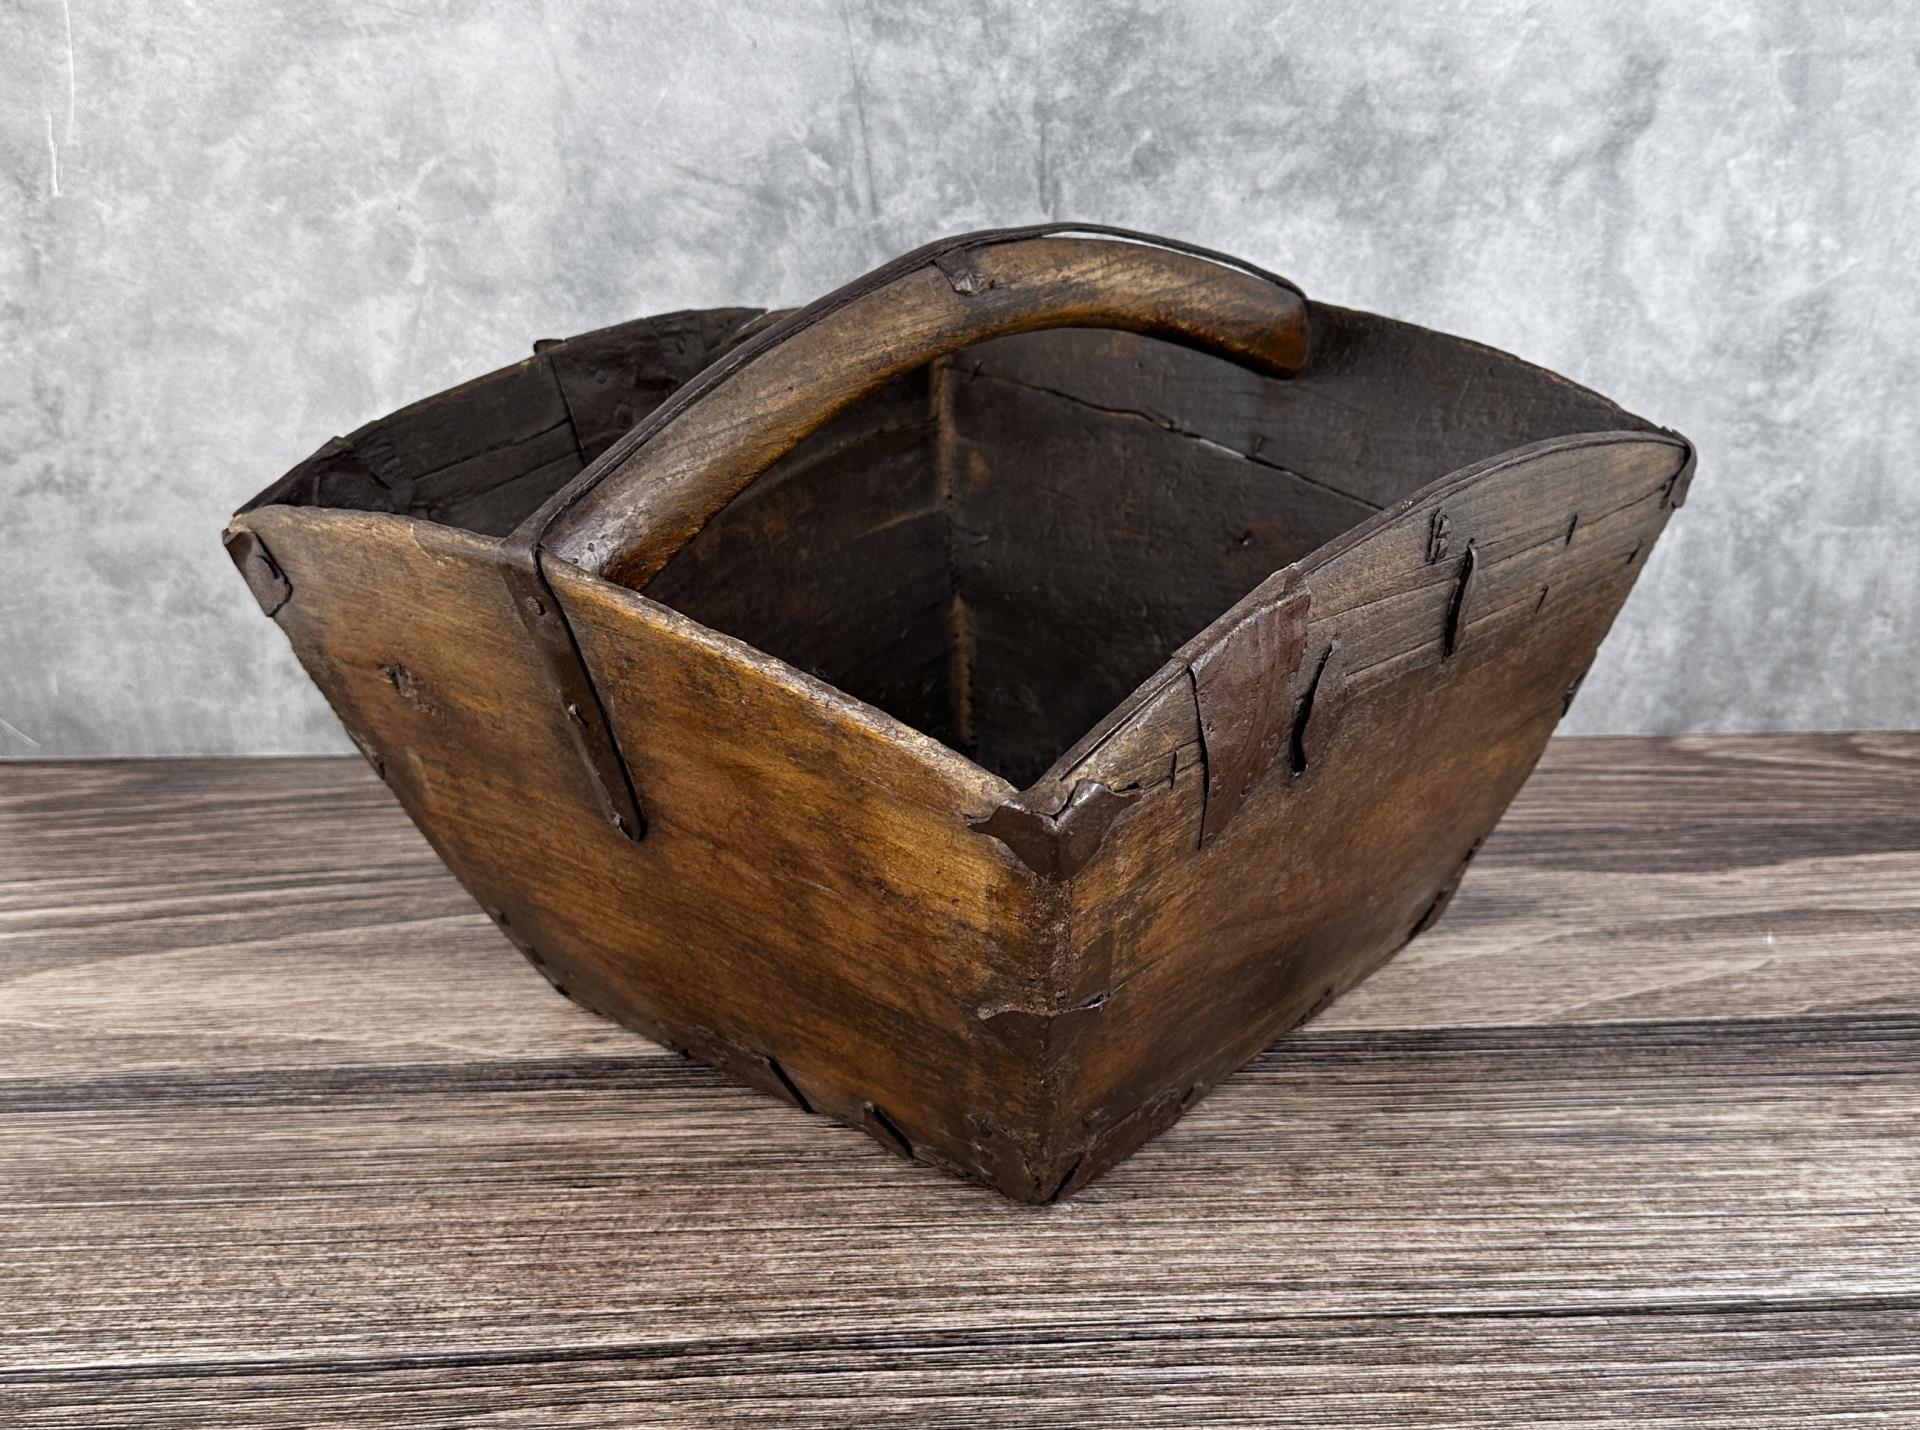 Antique Chinese Wood Rice Bucket Basket